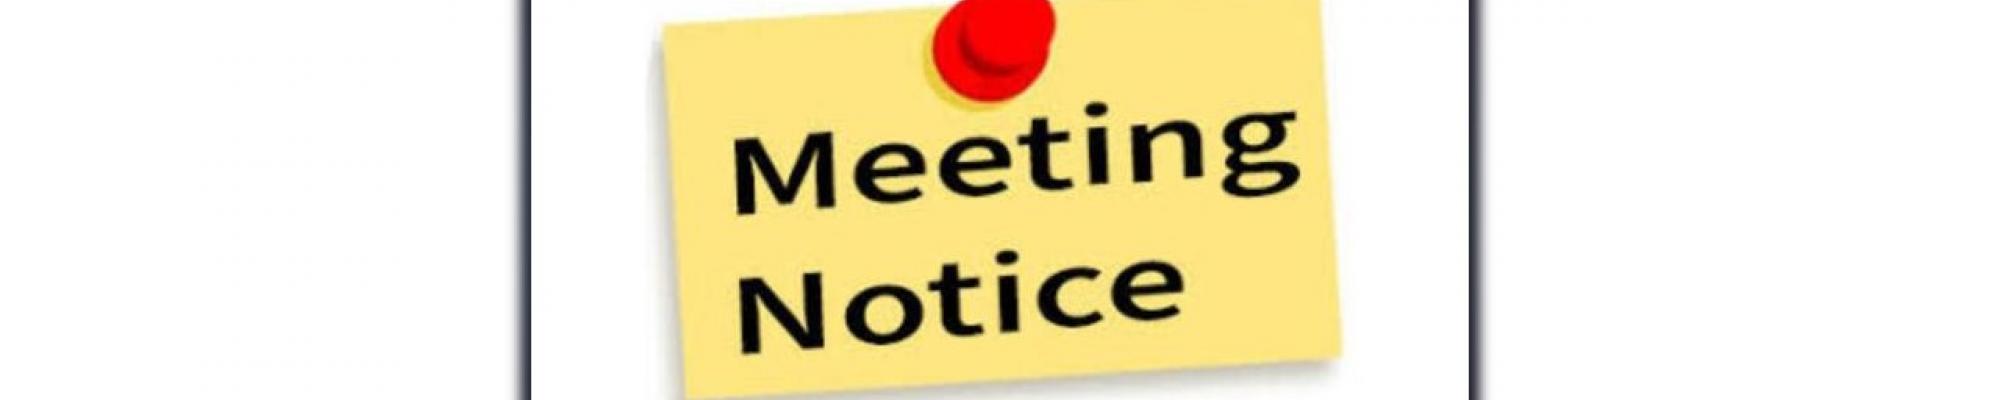 meeting notice